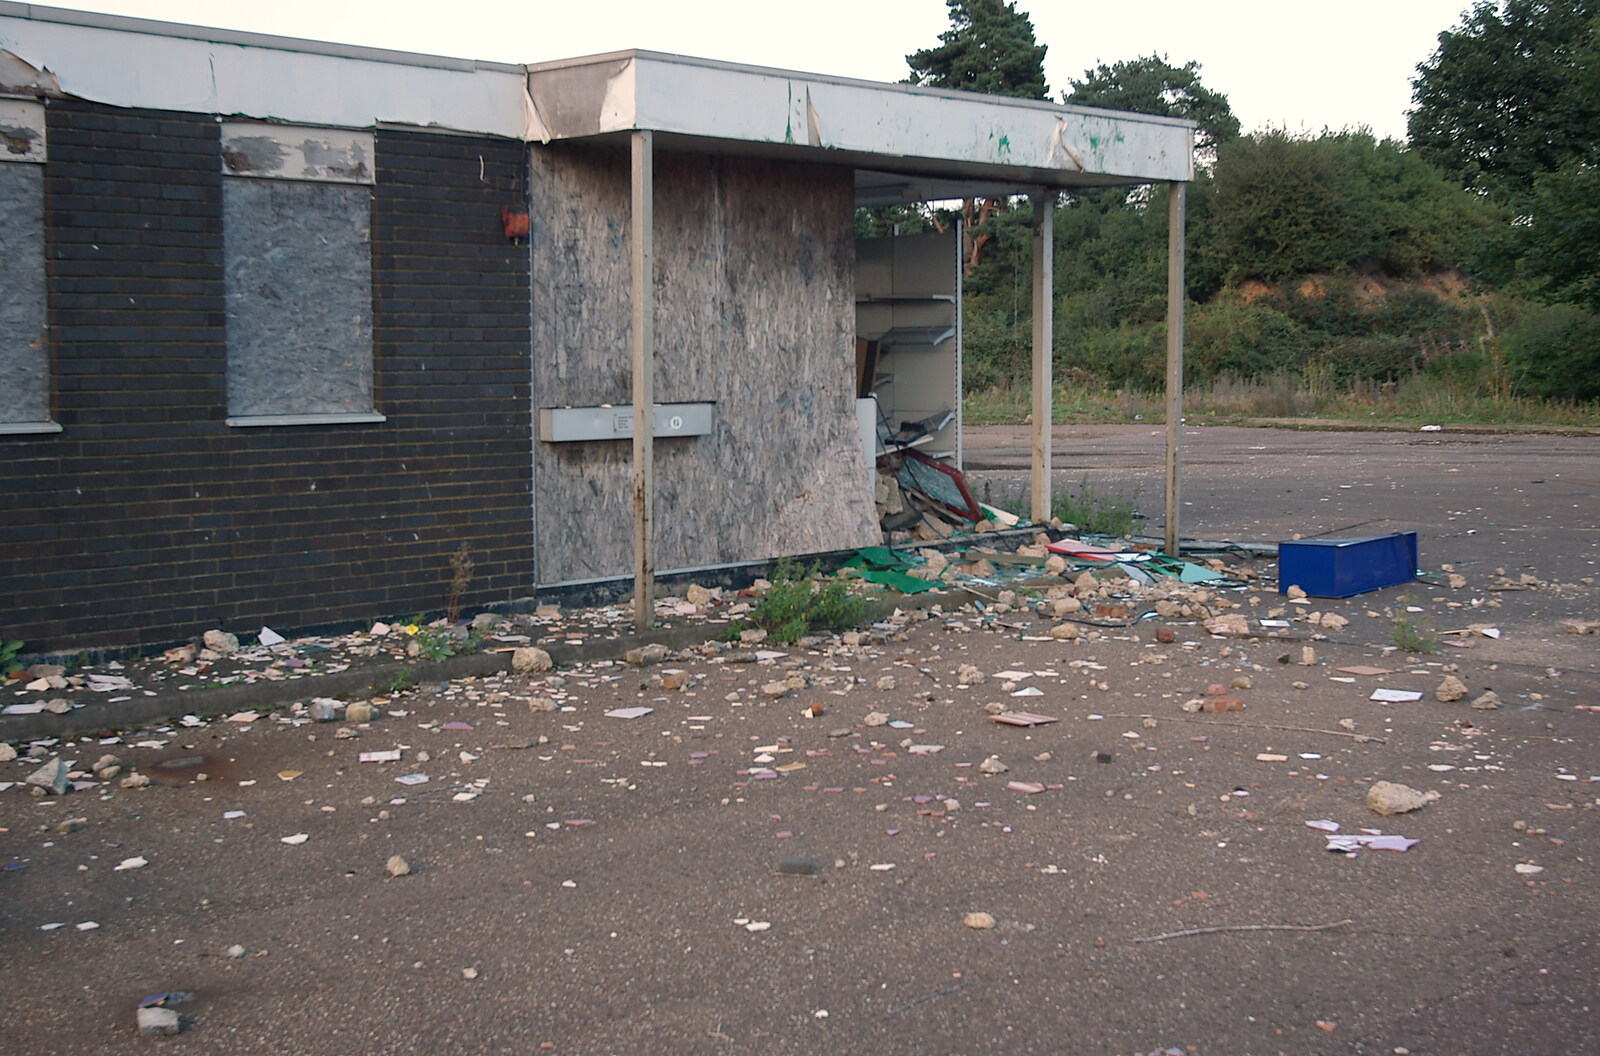 Petrol-station detritus from Dead Transport Artefacts: Abandoned Petrol Station and Little Chef, Kentford, Suffolk - 8th September 2005